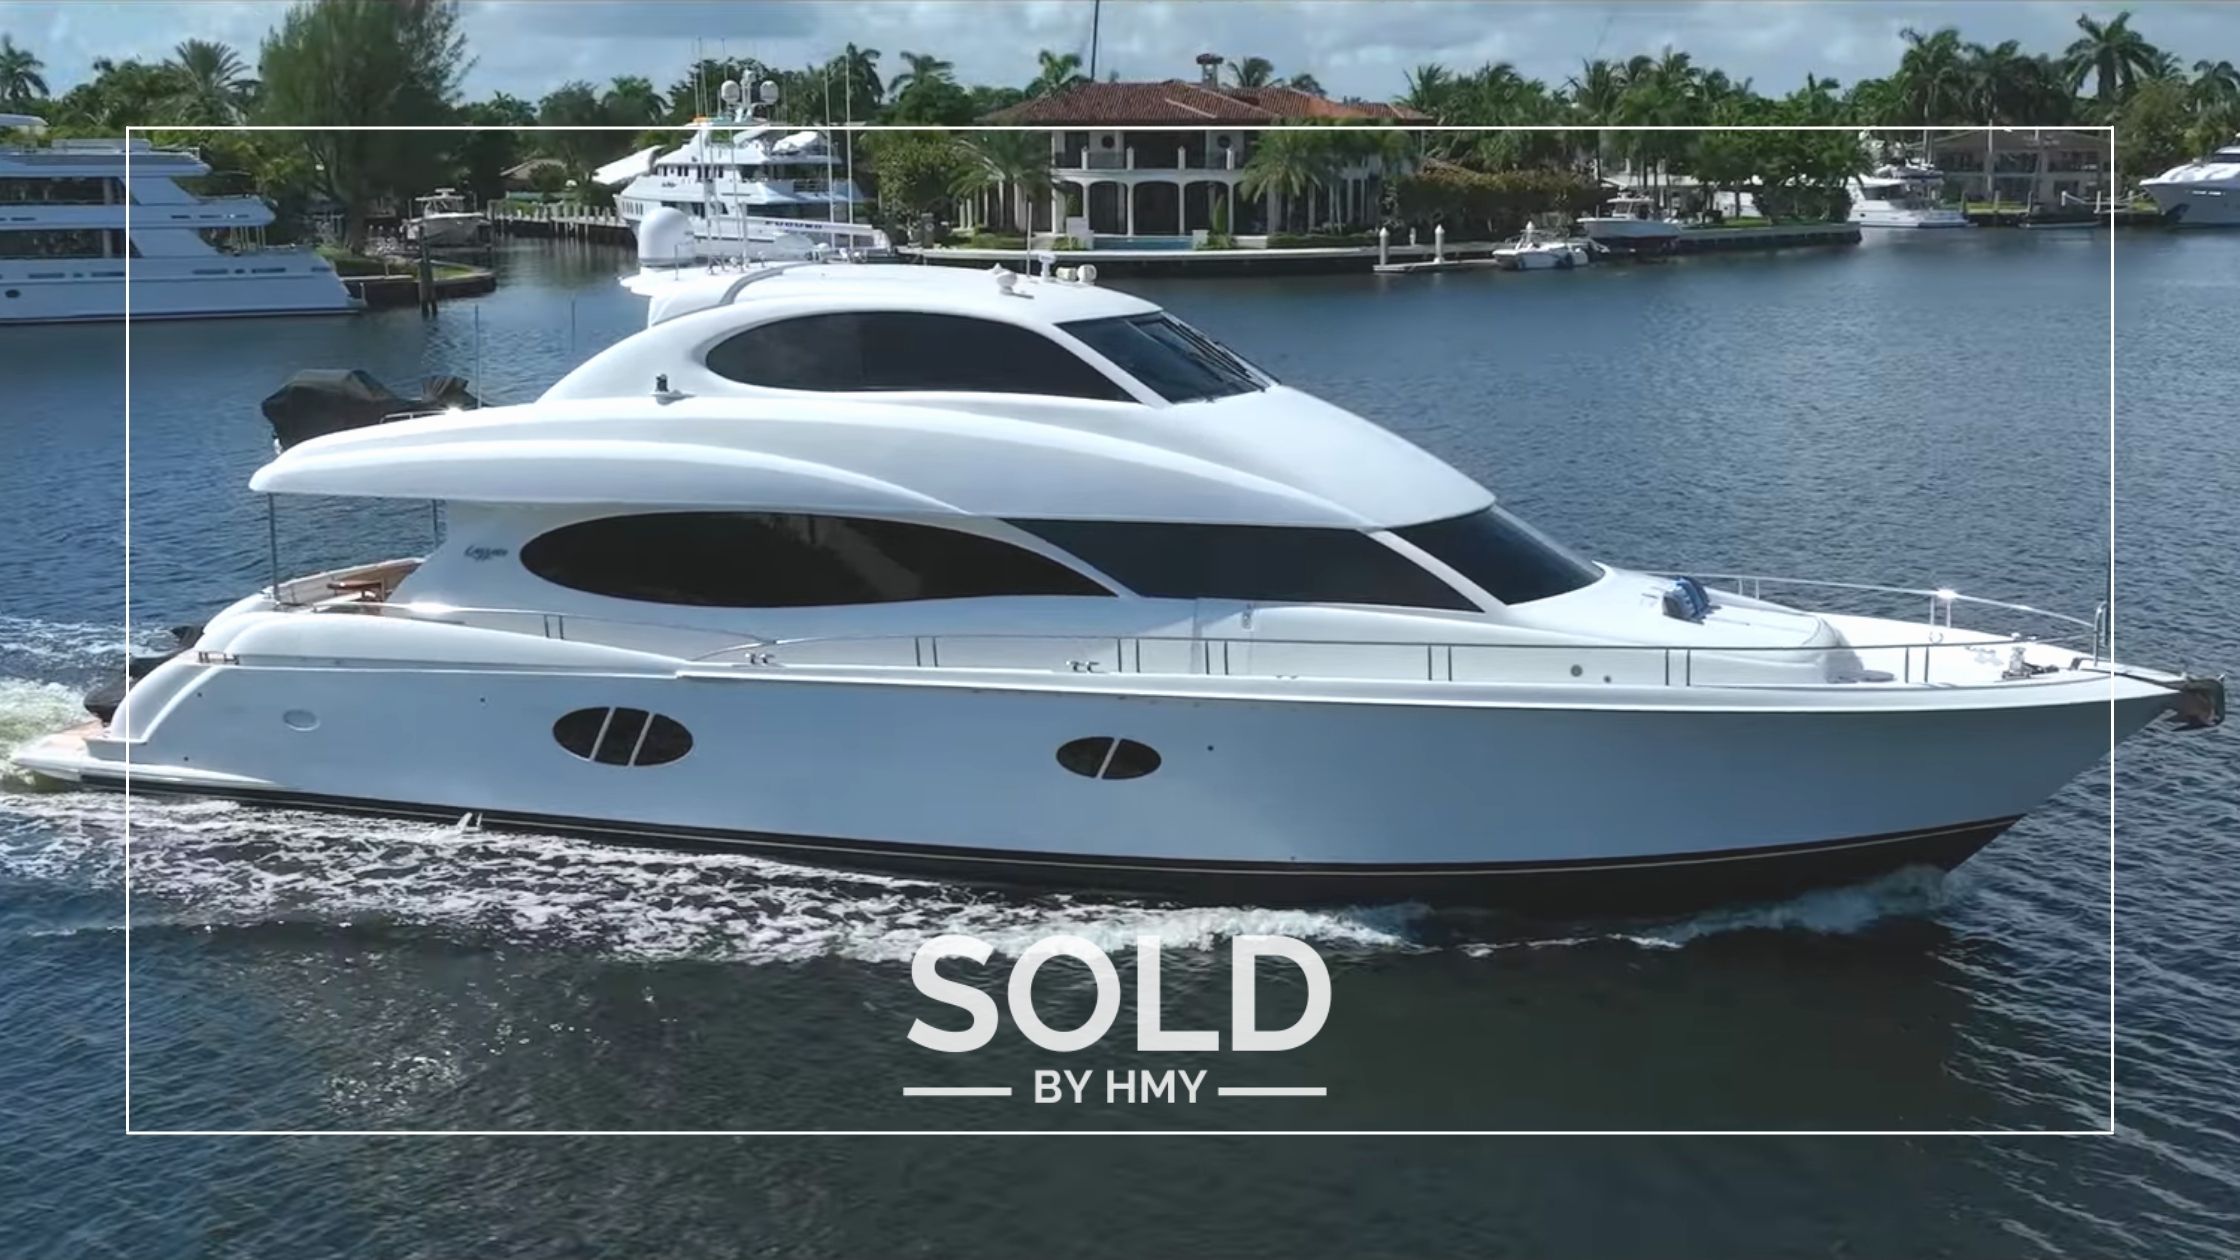 2009 Lazzara 84’ “GYPSEA” Sold by HMY Yacht Sales Professional Tony Lazzara